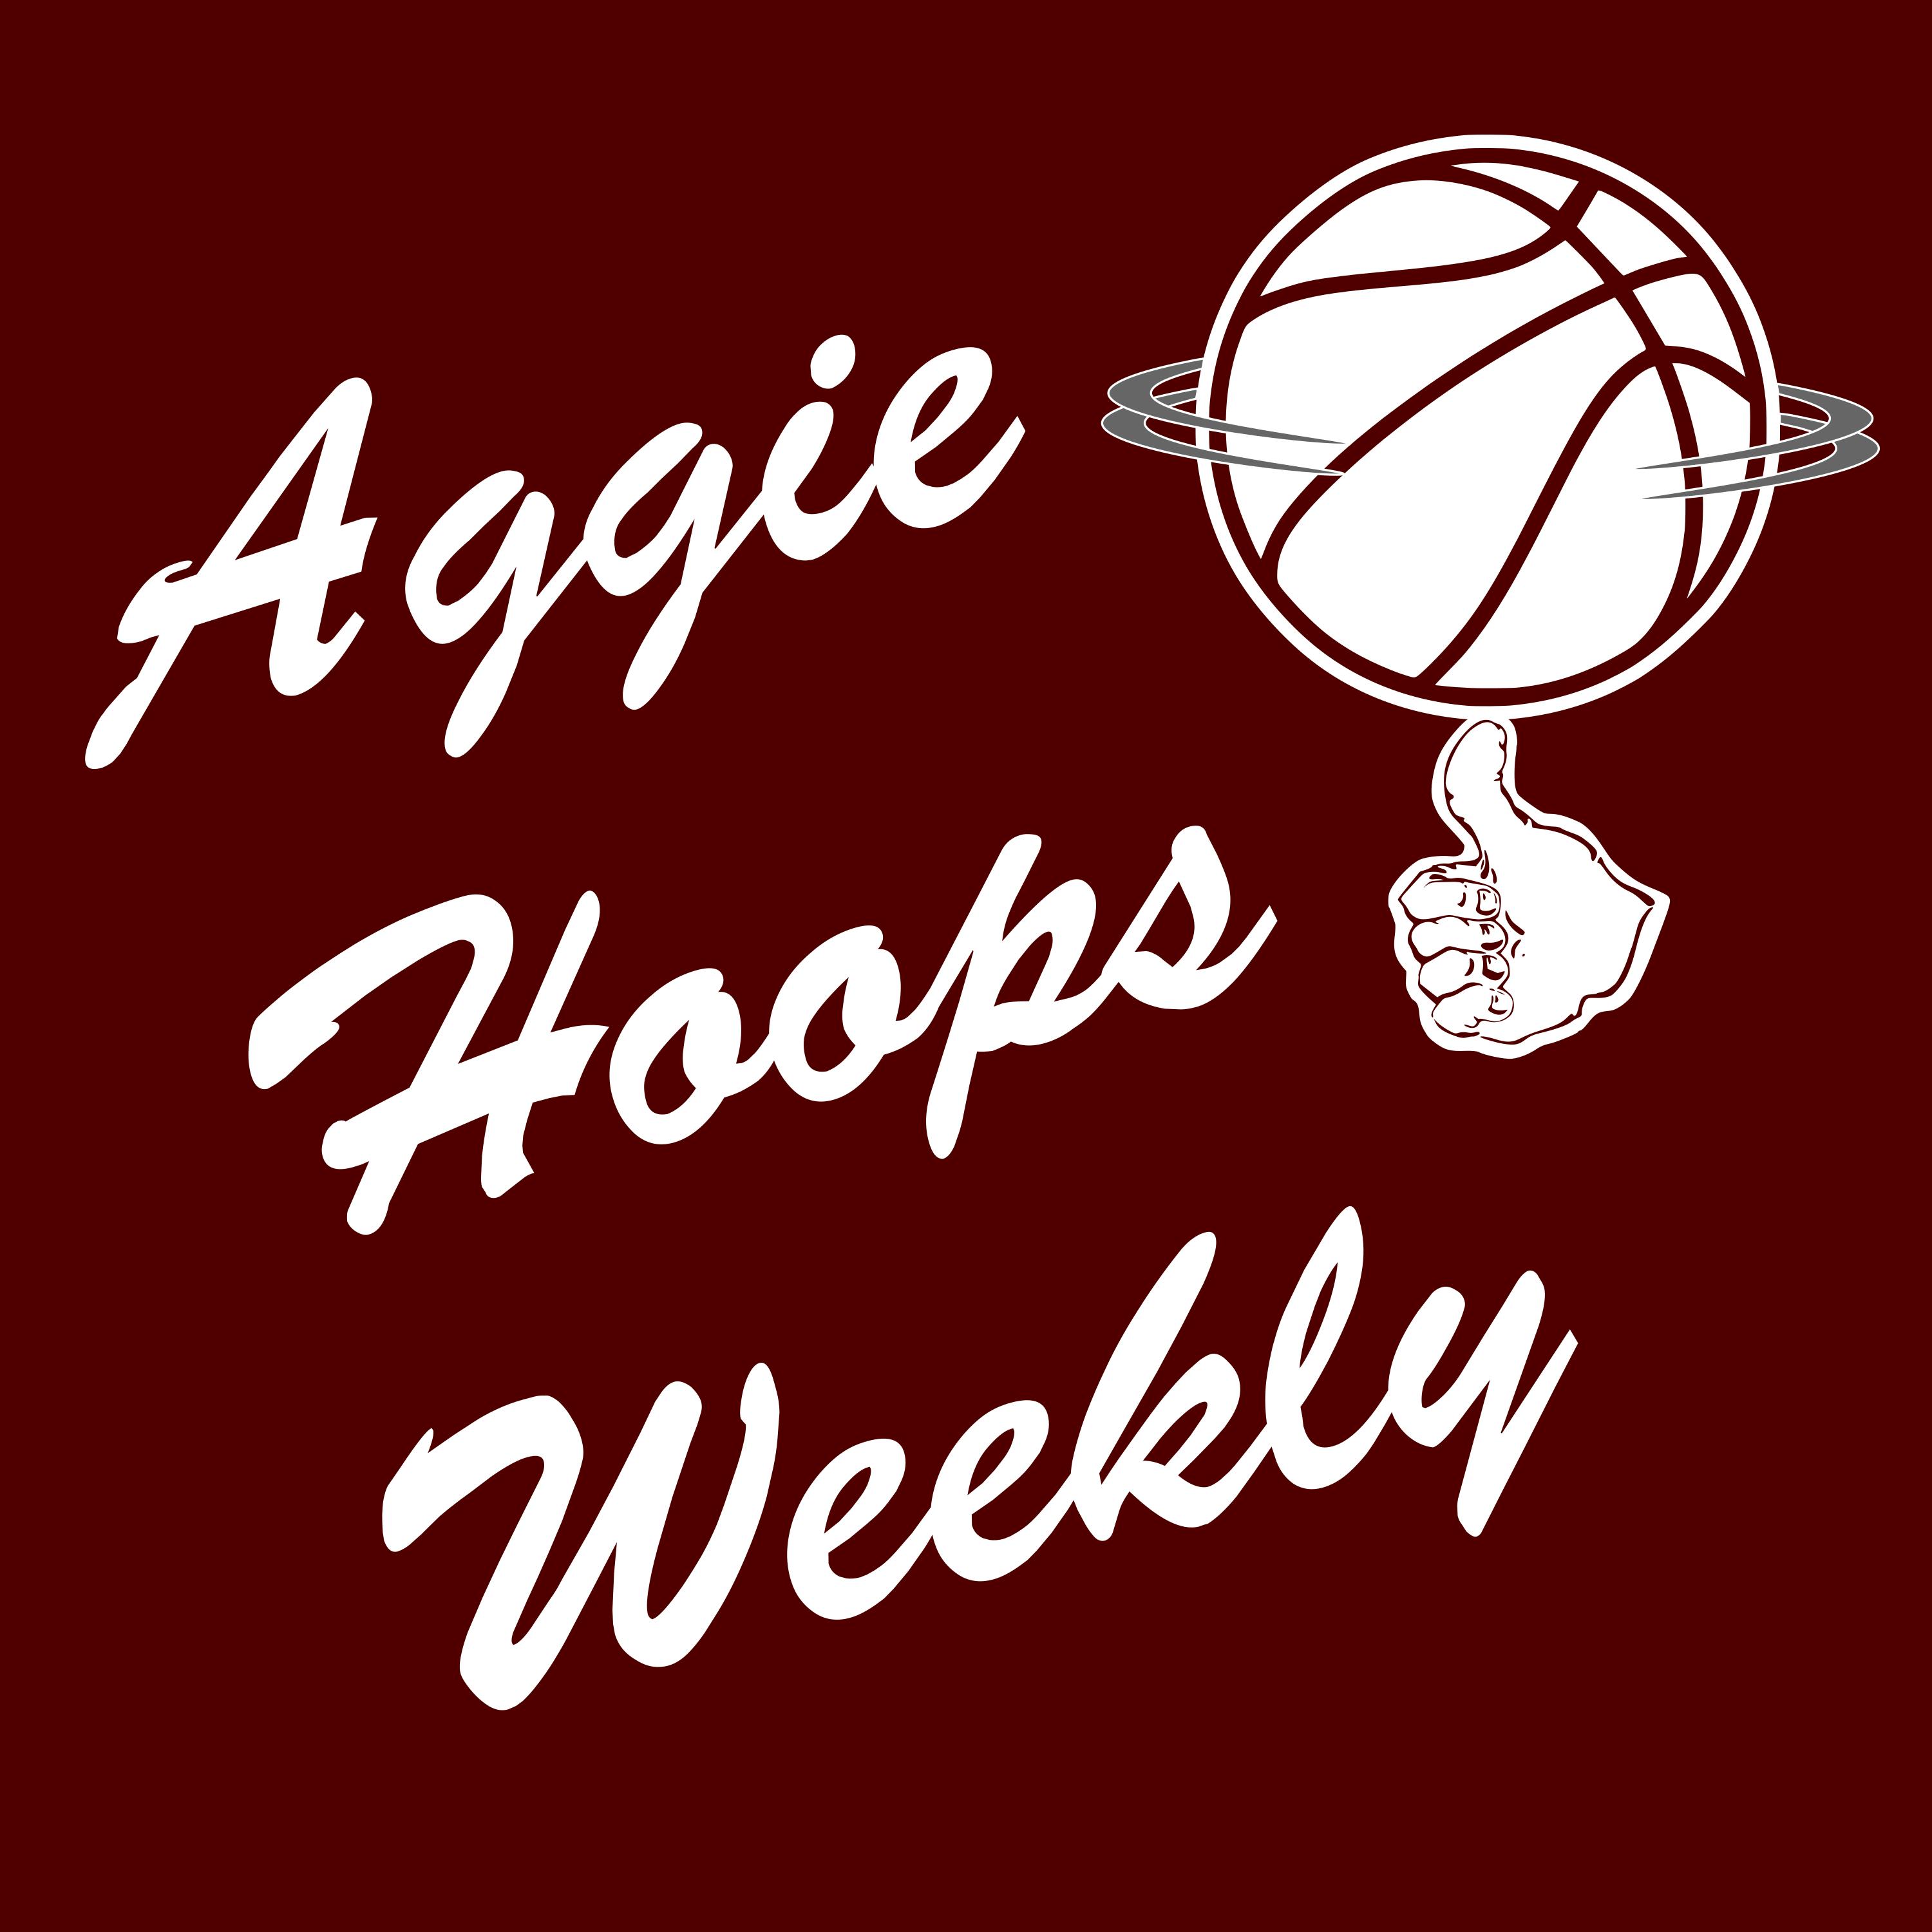 Aggie Hoops Weekly: The Buzz Era Begins